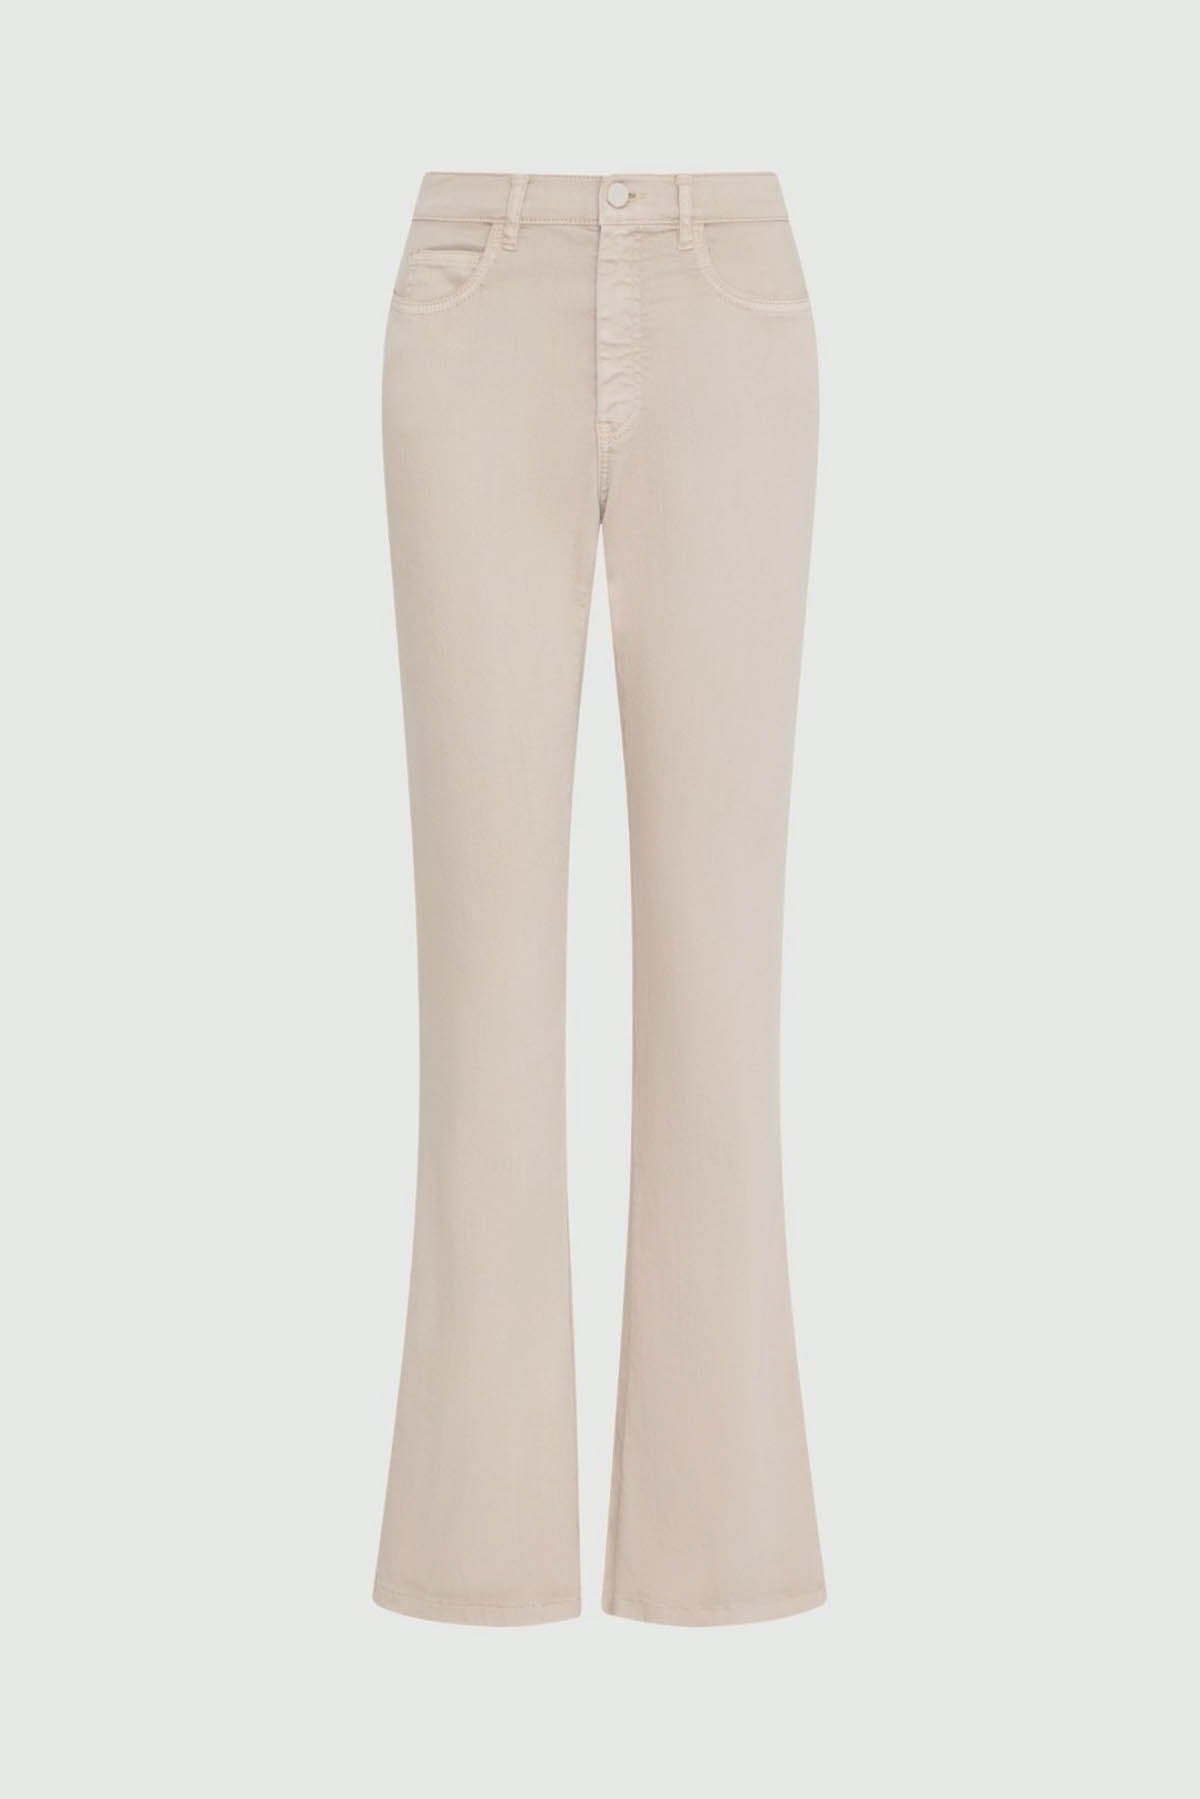 MARELLA PANTALONE LUNGO  SALE / 34 Jeans Donna Marella Monochrome Sahara